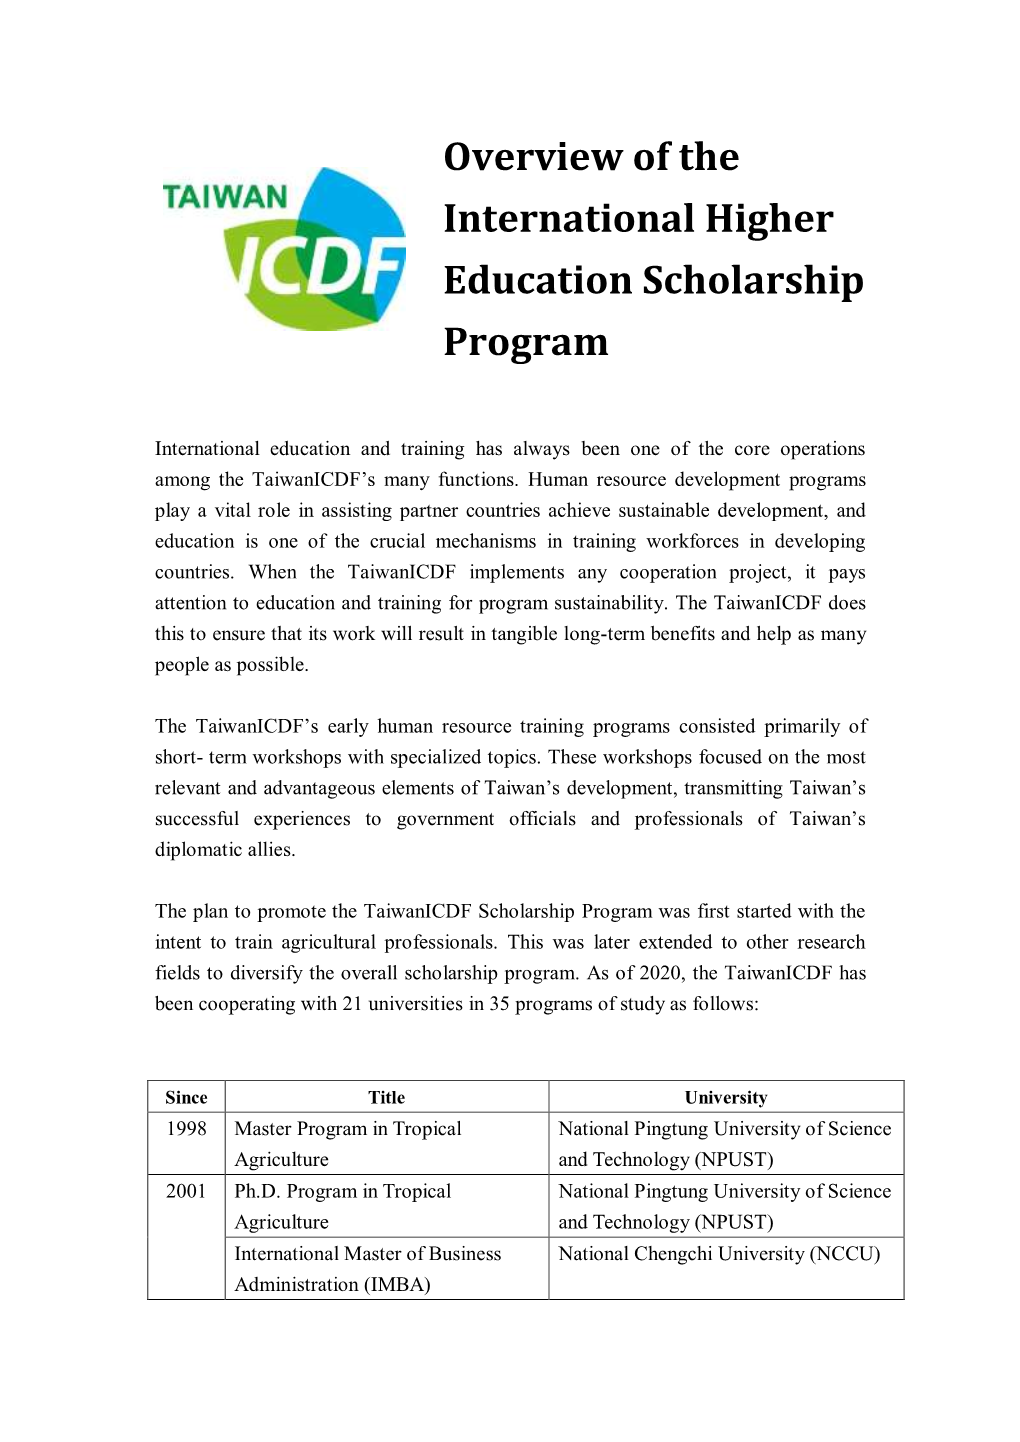 Overview of the International Higher Education Scholarship Program